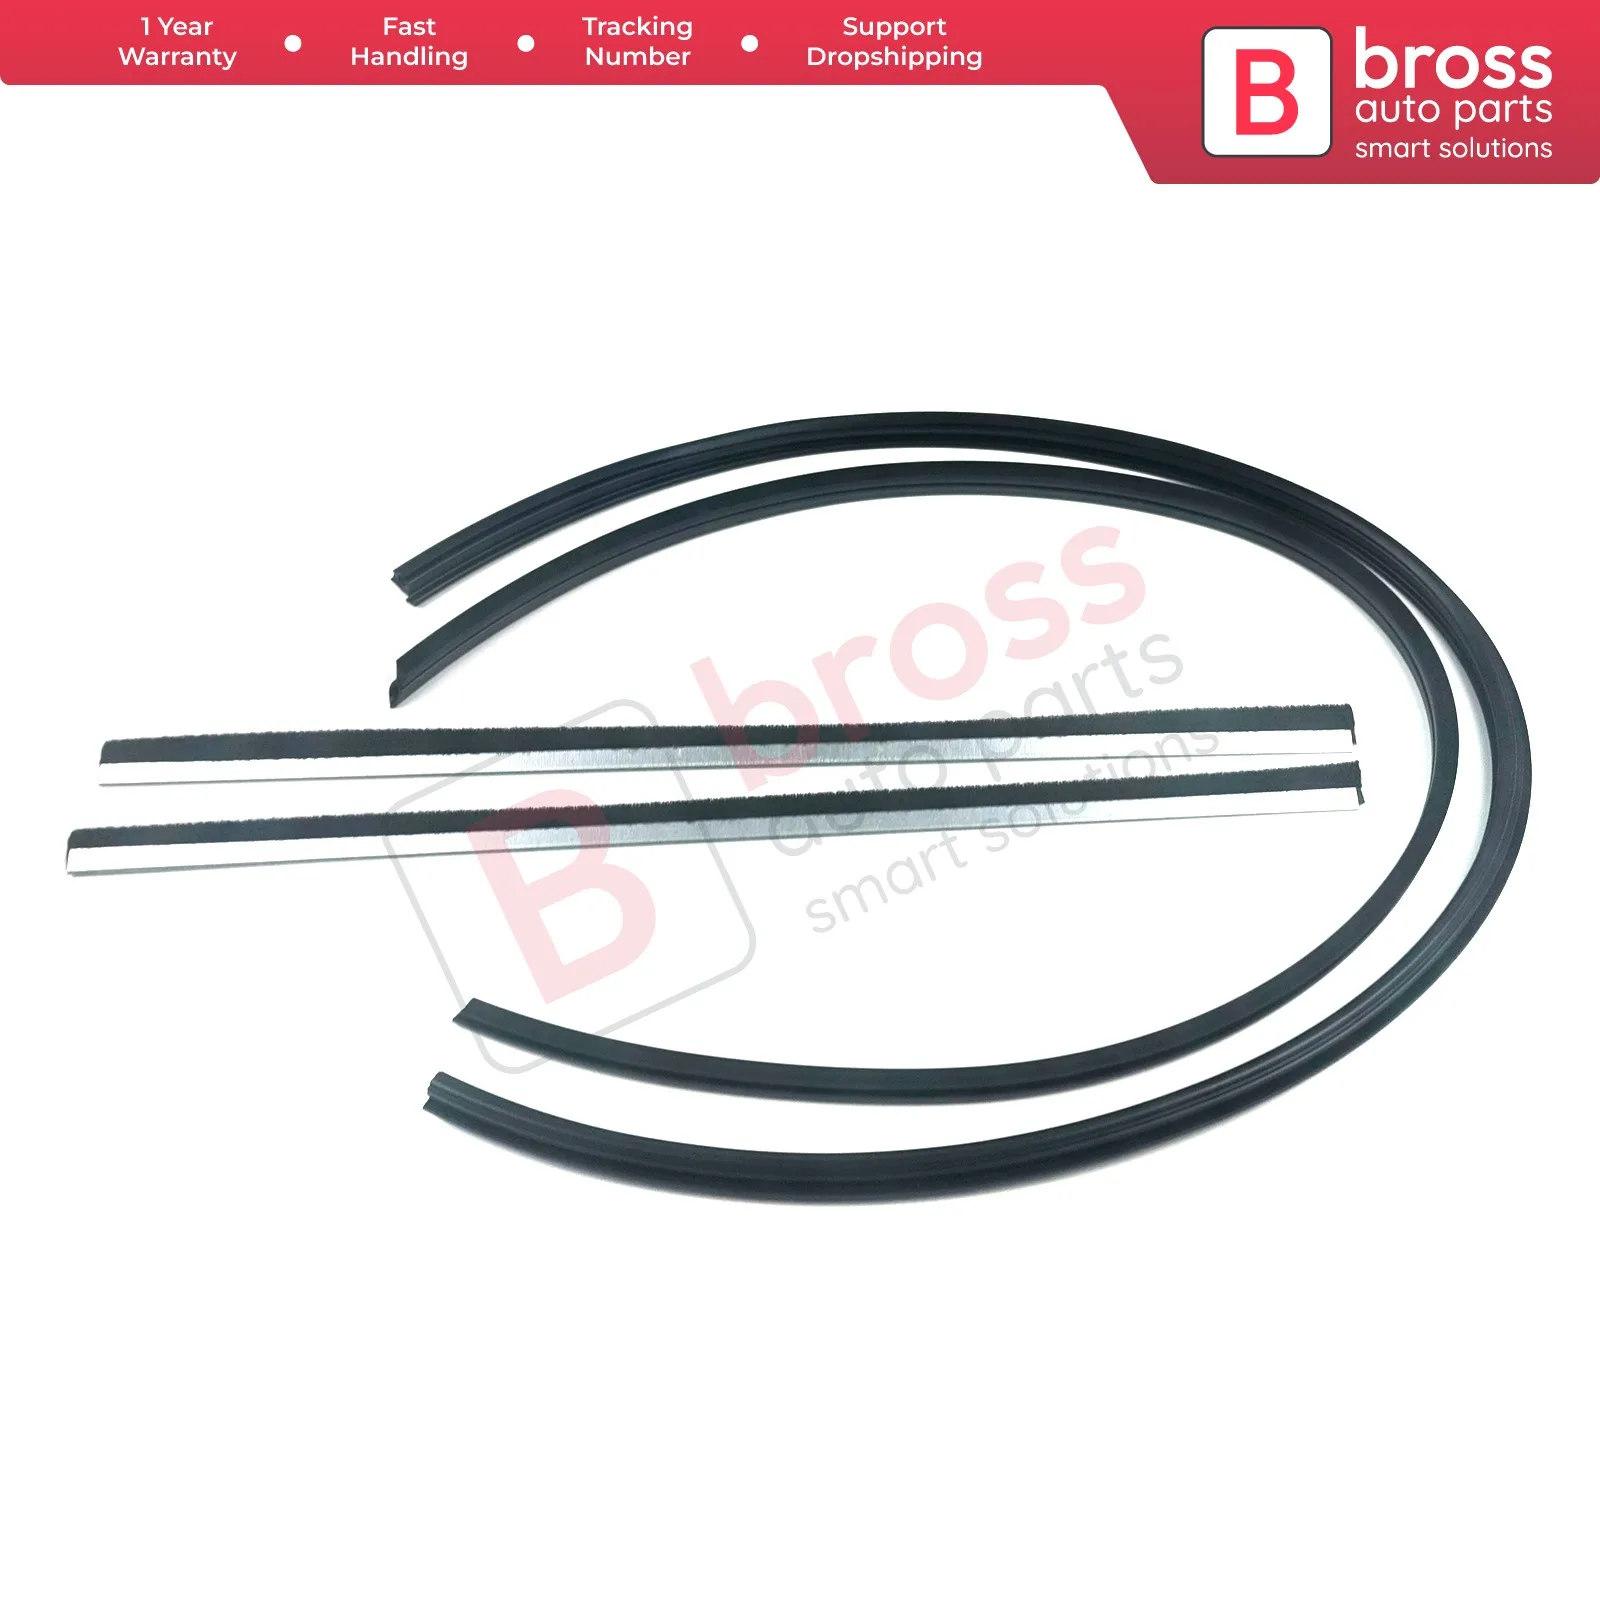 

Bross Auto Parts BSR534 Sunroof Rubber Seal Gasket Set for Mercedes 108 W, 109 W, 114 W, 115 W, 116 W, 123 W, 126 W, 140 W